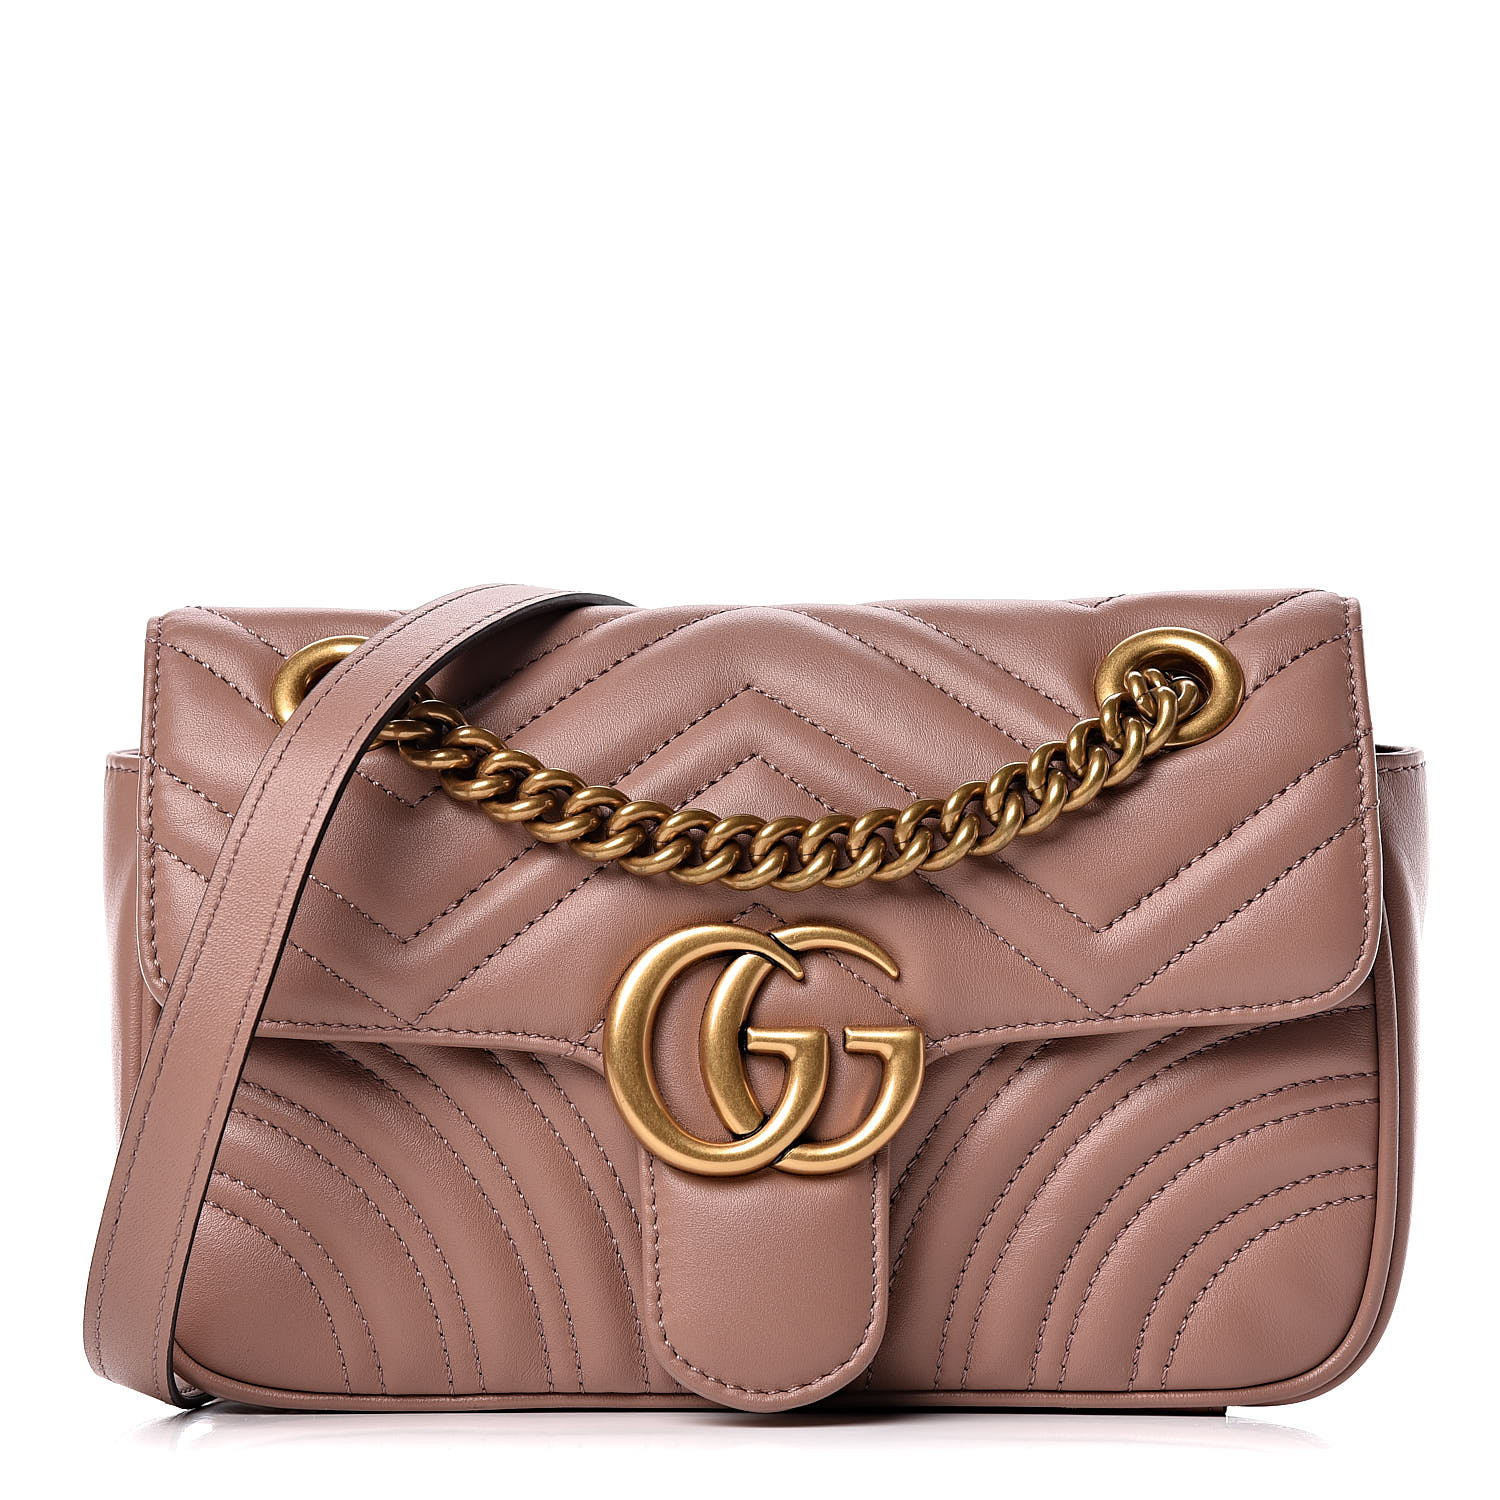 Blissfull: Gucci Gg Marmont Small Matelasse Shoulder Bag